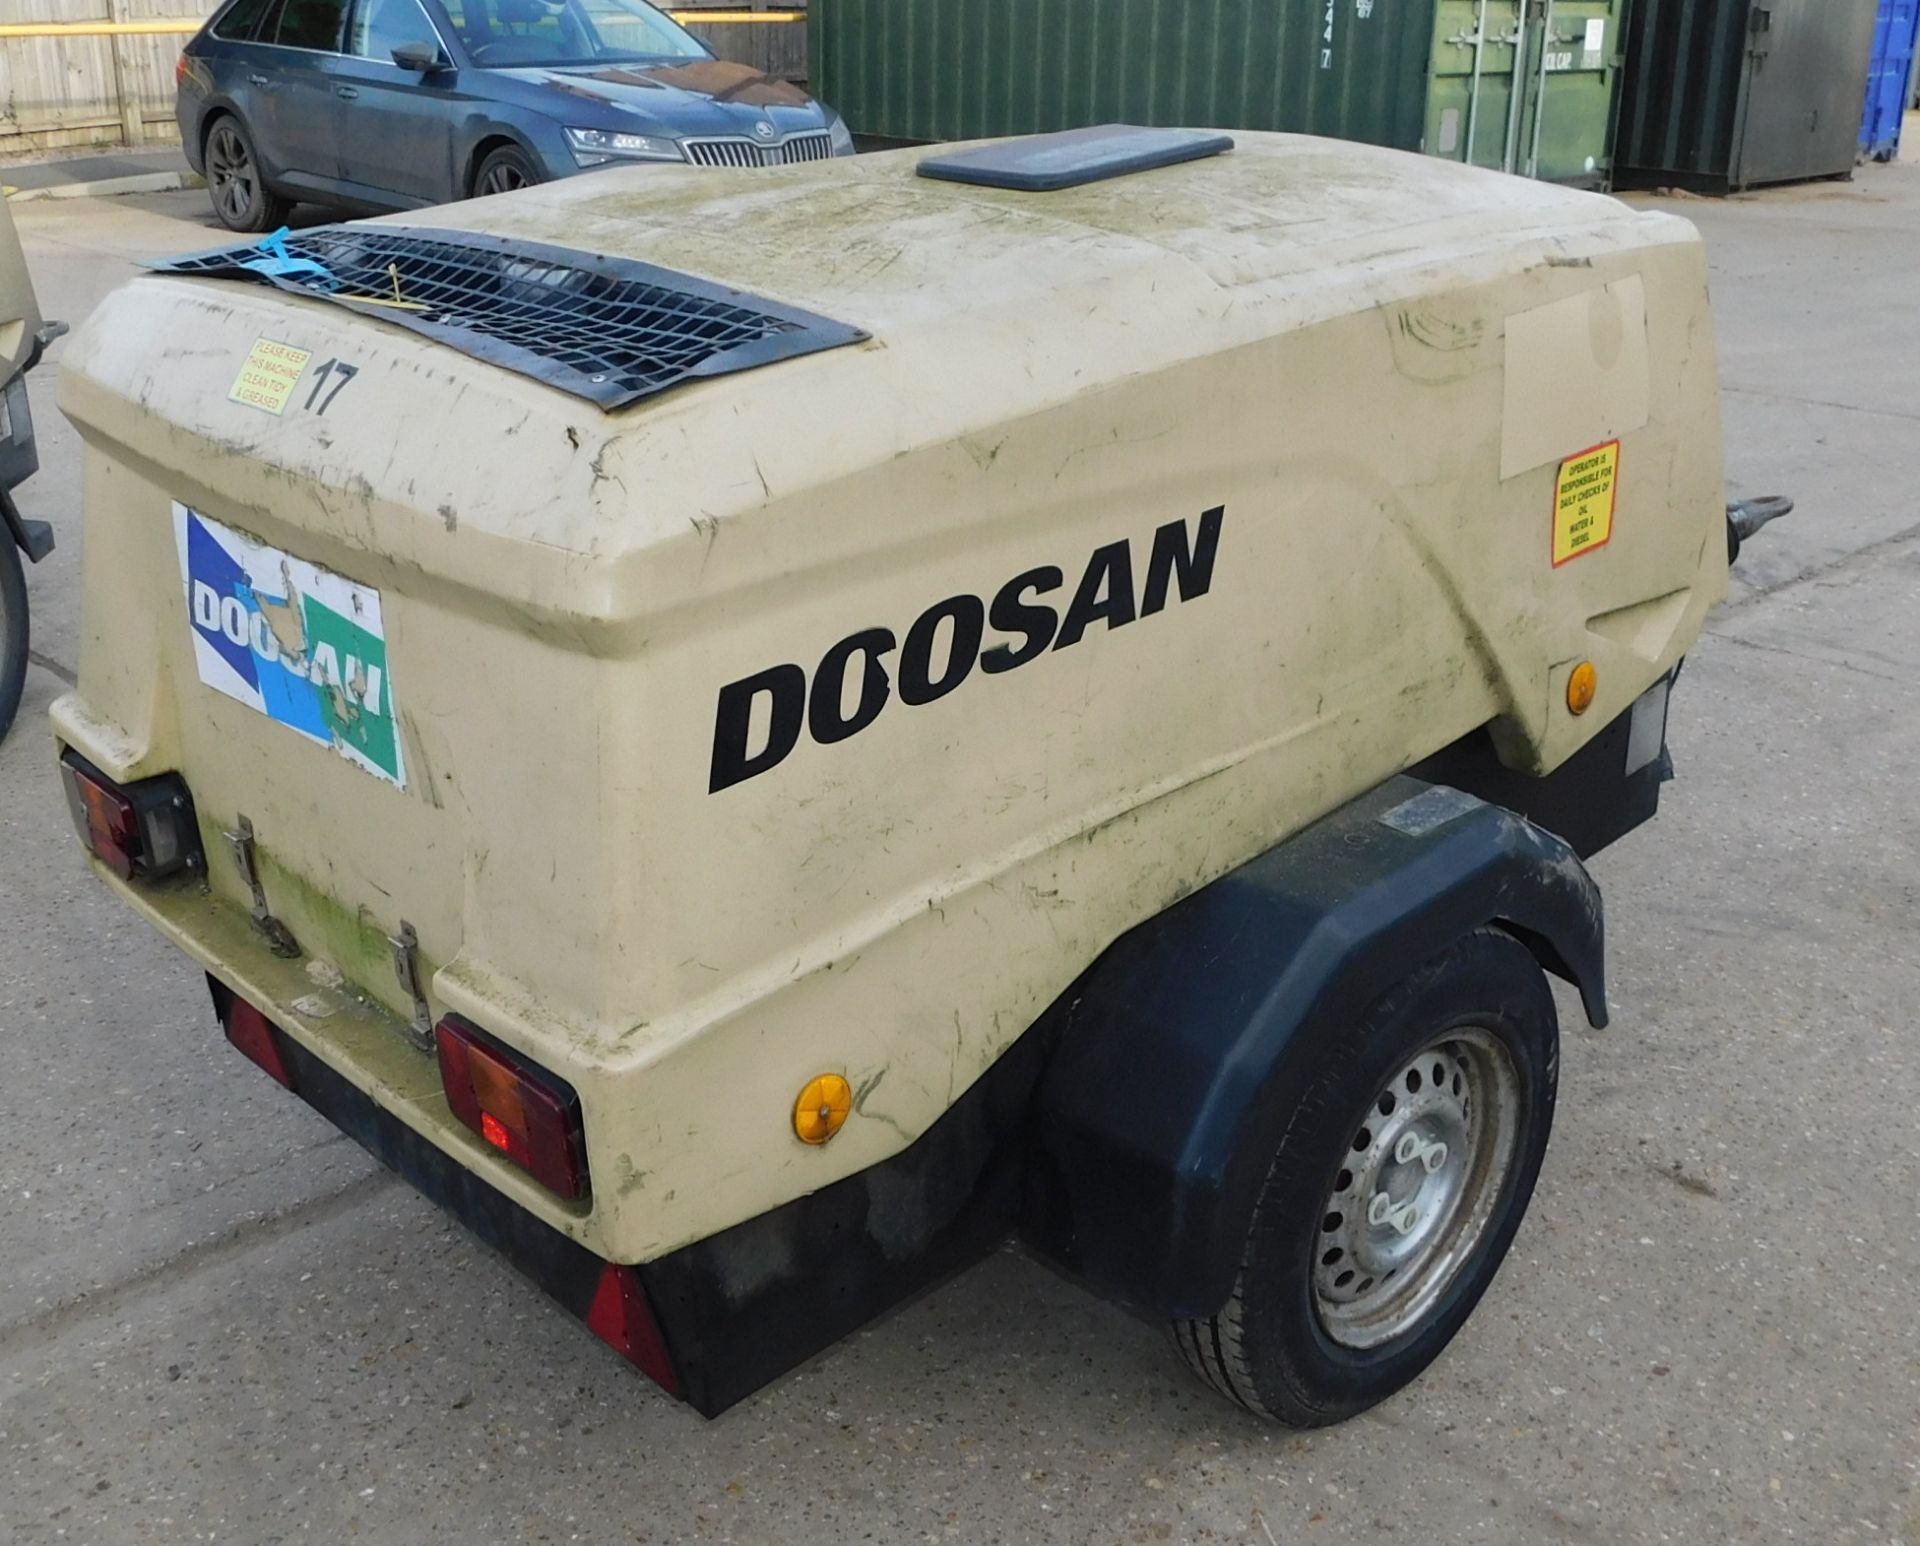 Doosan 731E+ Trailer Mounted Compressor (2013), Serial Number UN5731EFXDY322632, 948 hours ( - Image 3 of 10